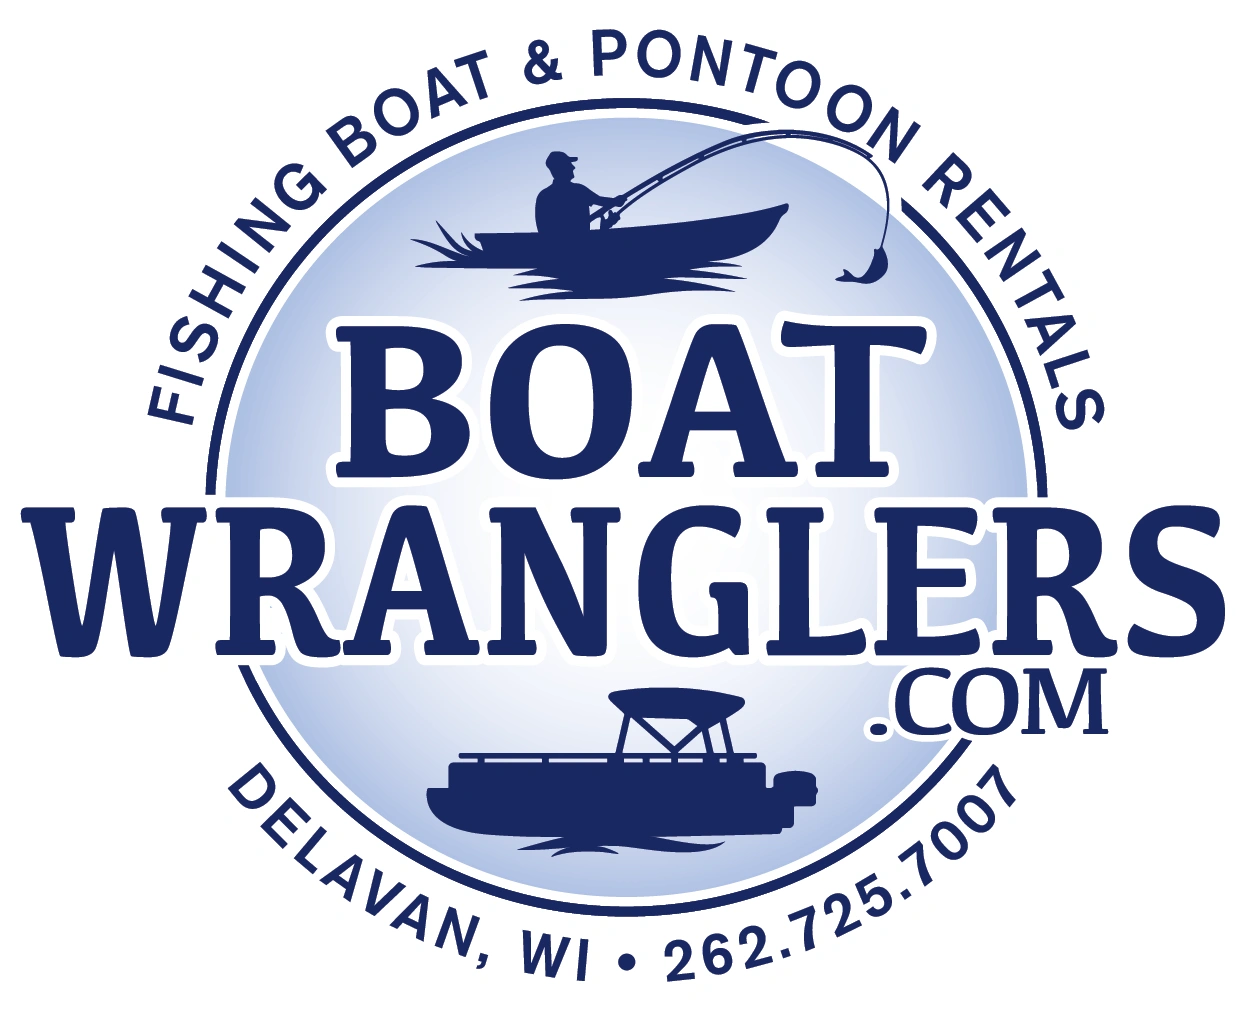 (c) Boatwranglers.com